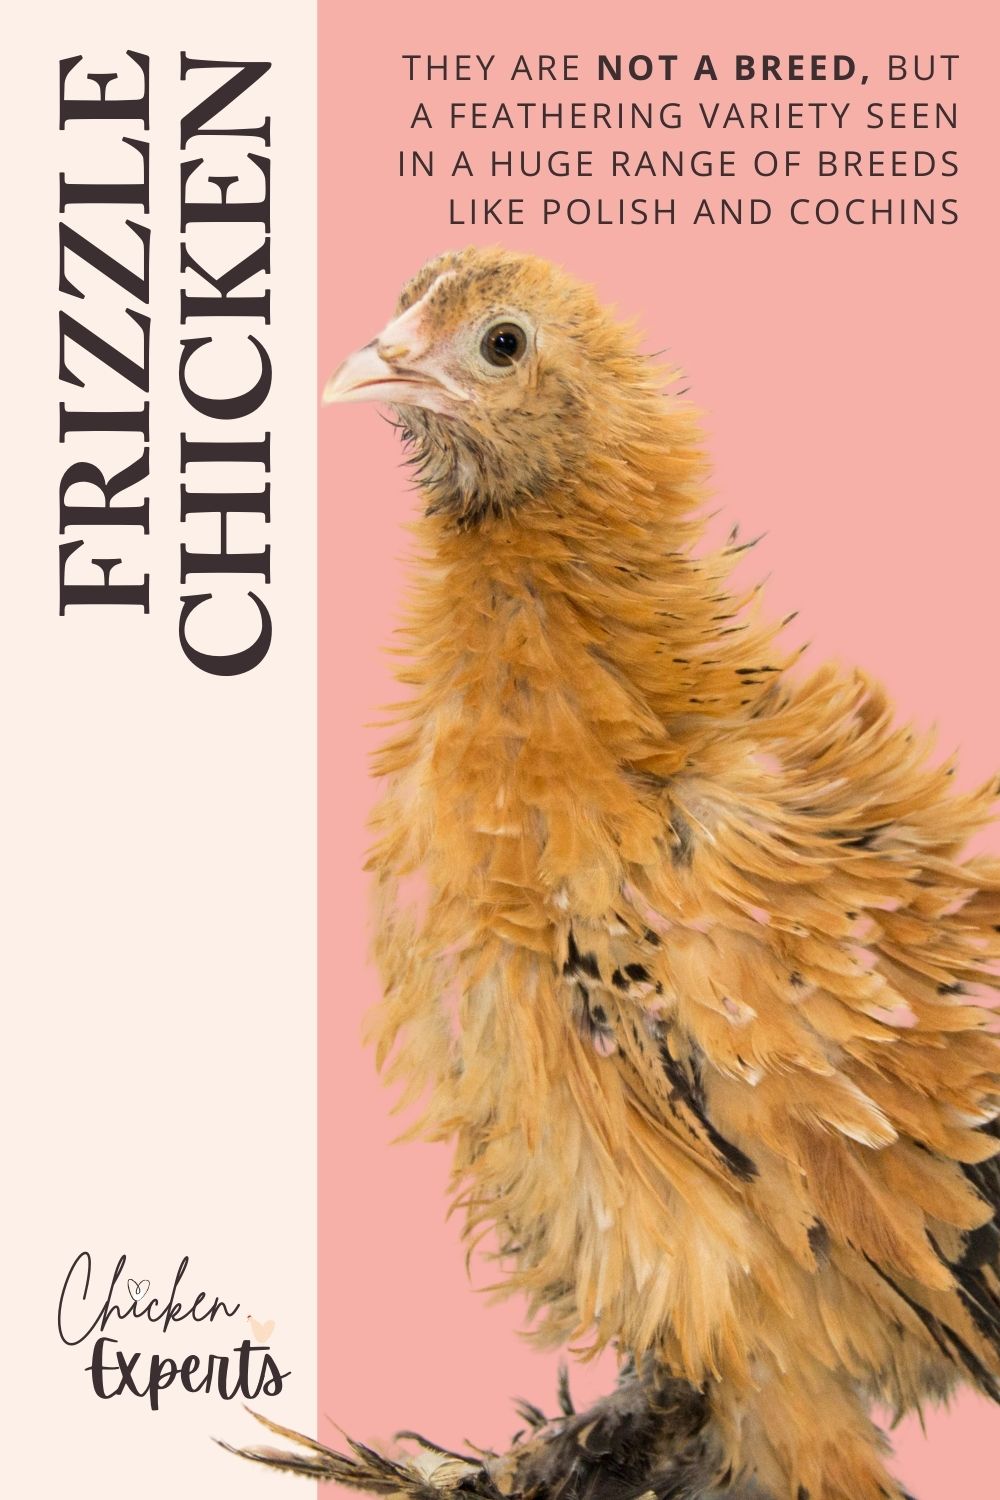 frizzle chicken